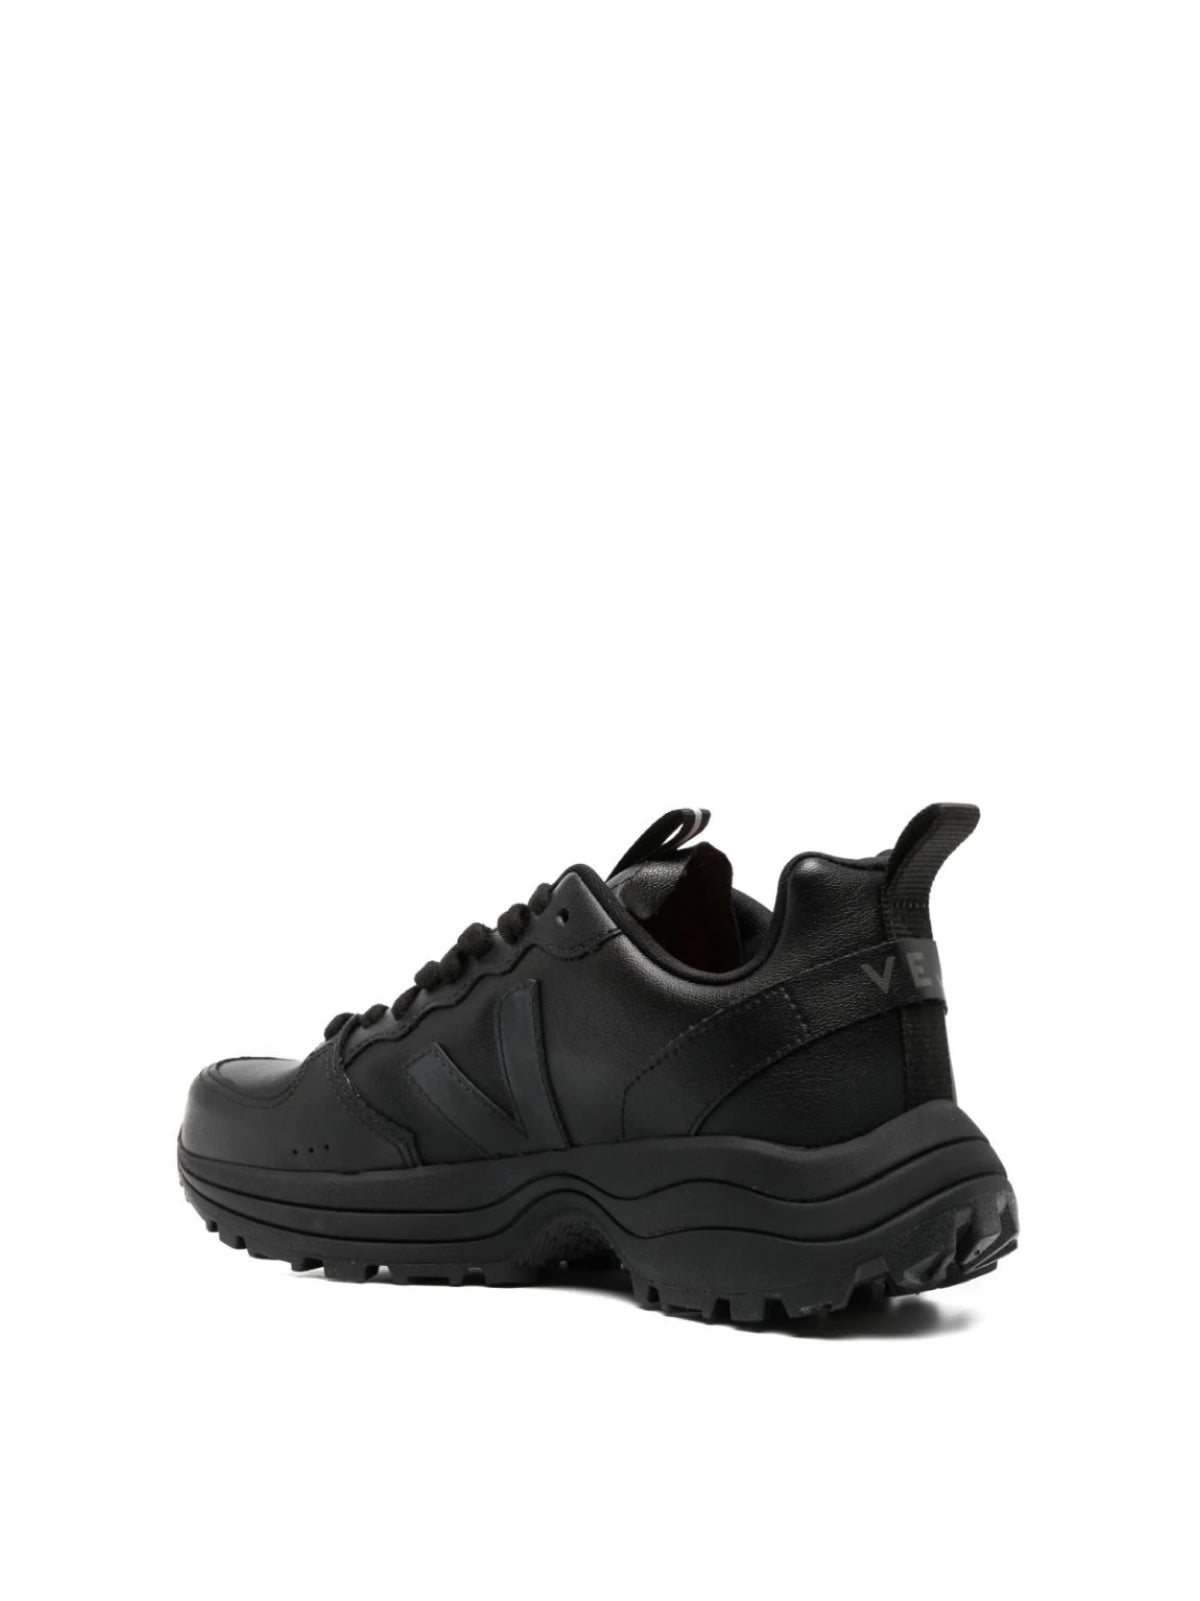 Venturi VC Full Black Sneakers